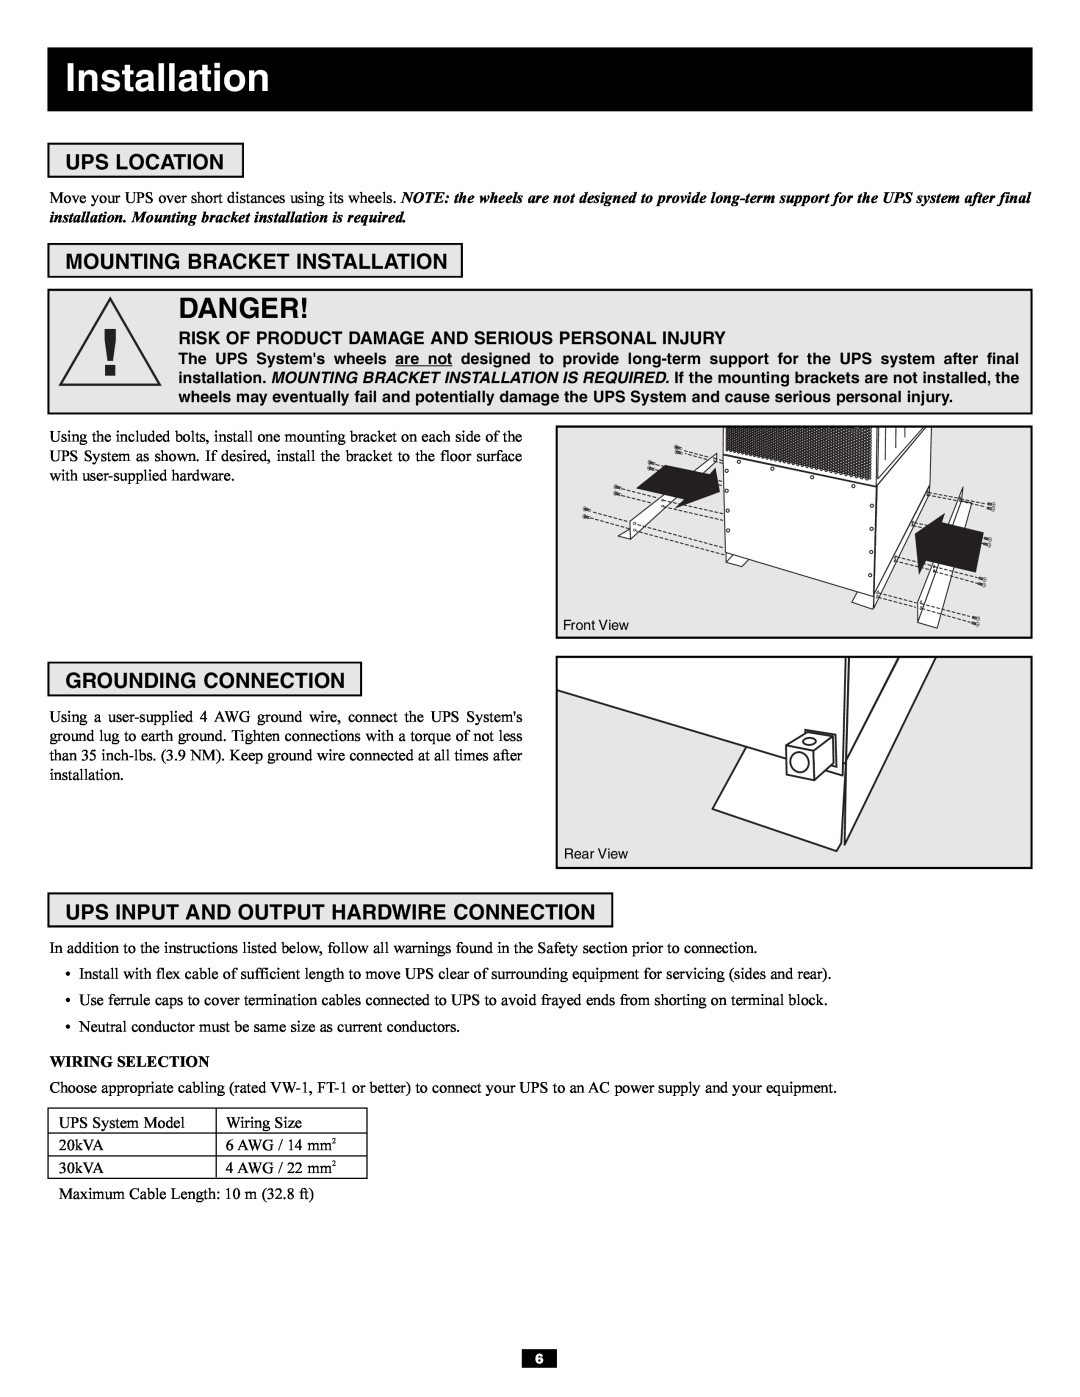 Tripp Lite 3-Phase 30kVA owner manual Danger, Ups Location, Mounting Bracket Installation, Grounding Connection 